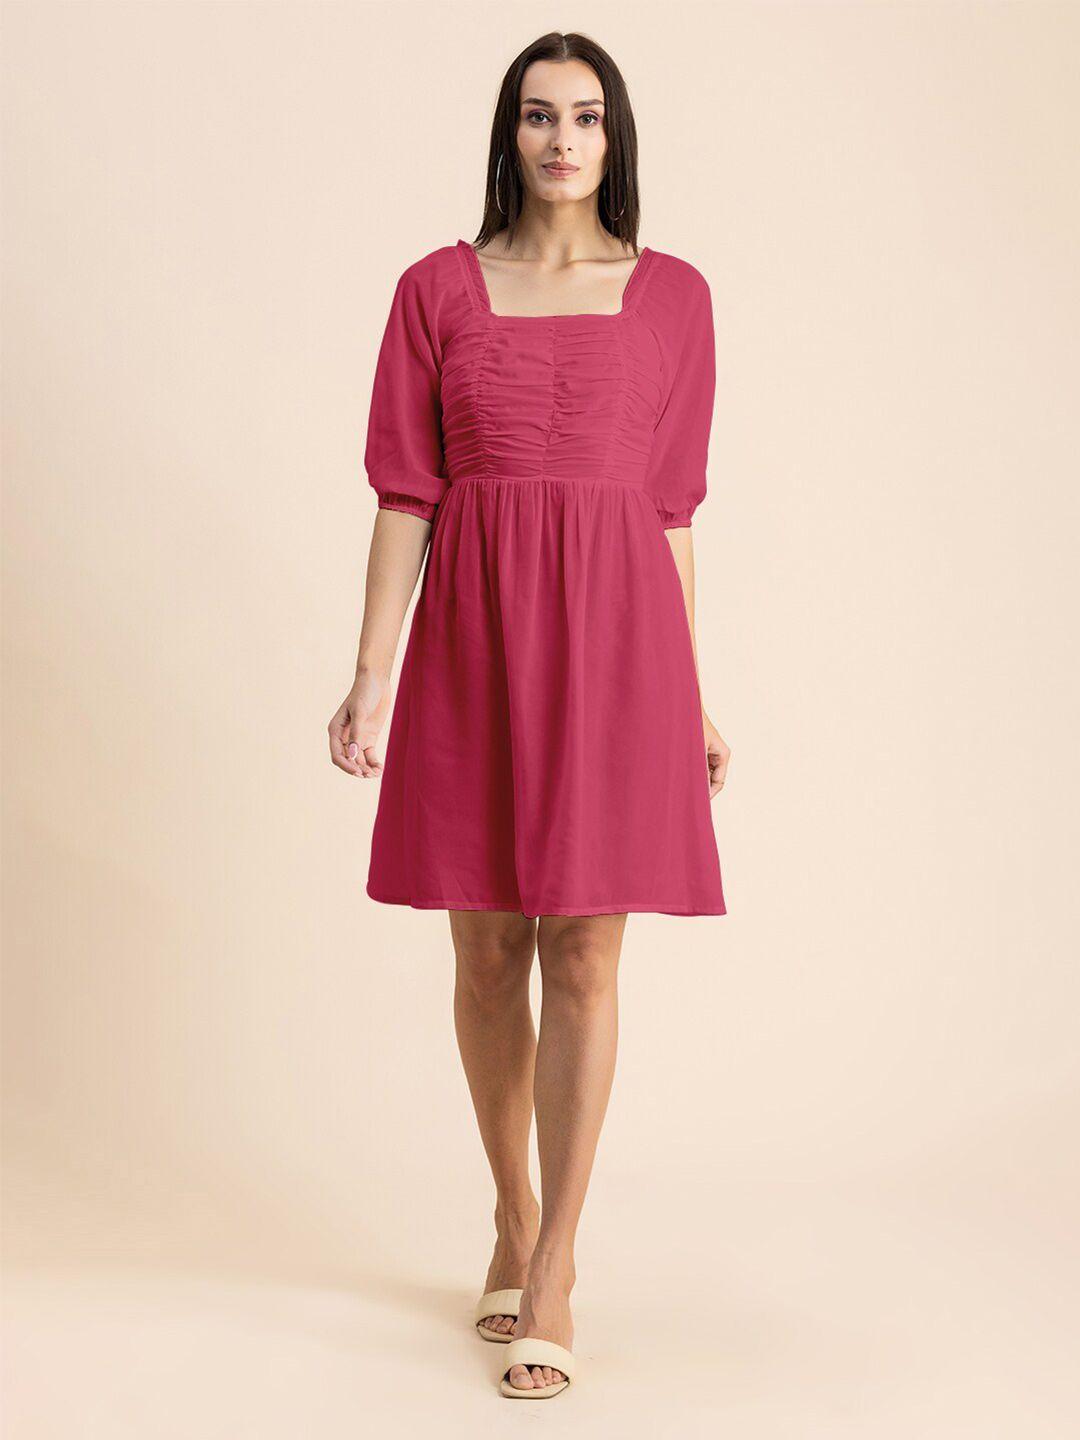 moomaya pink fit & flare dress